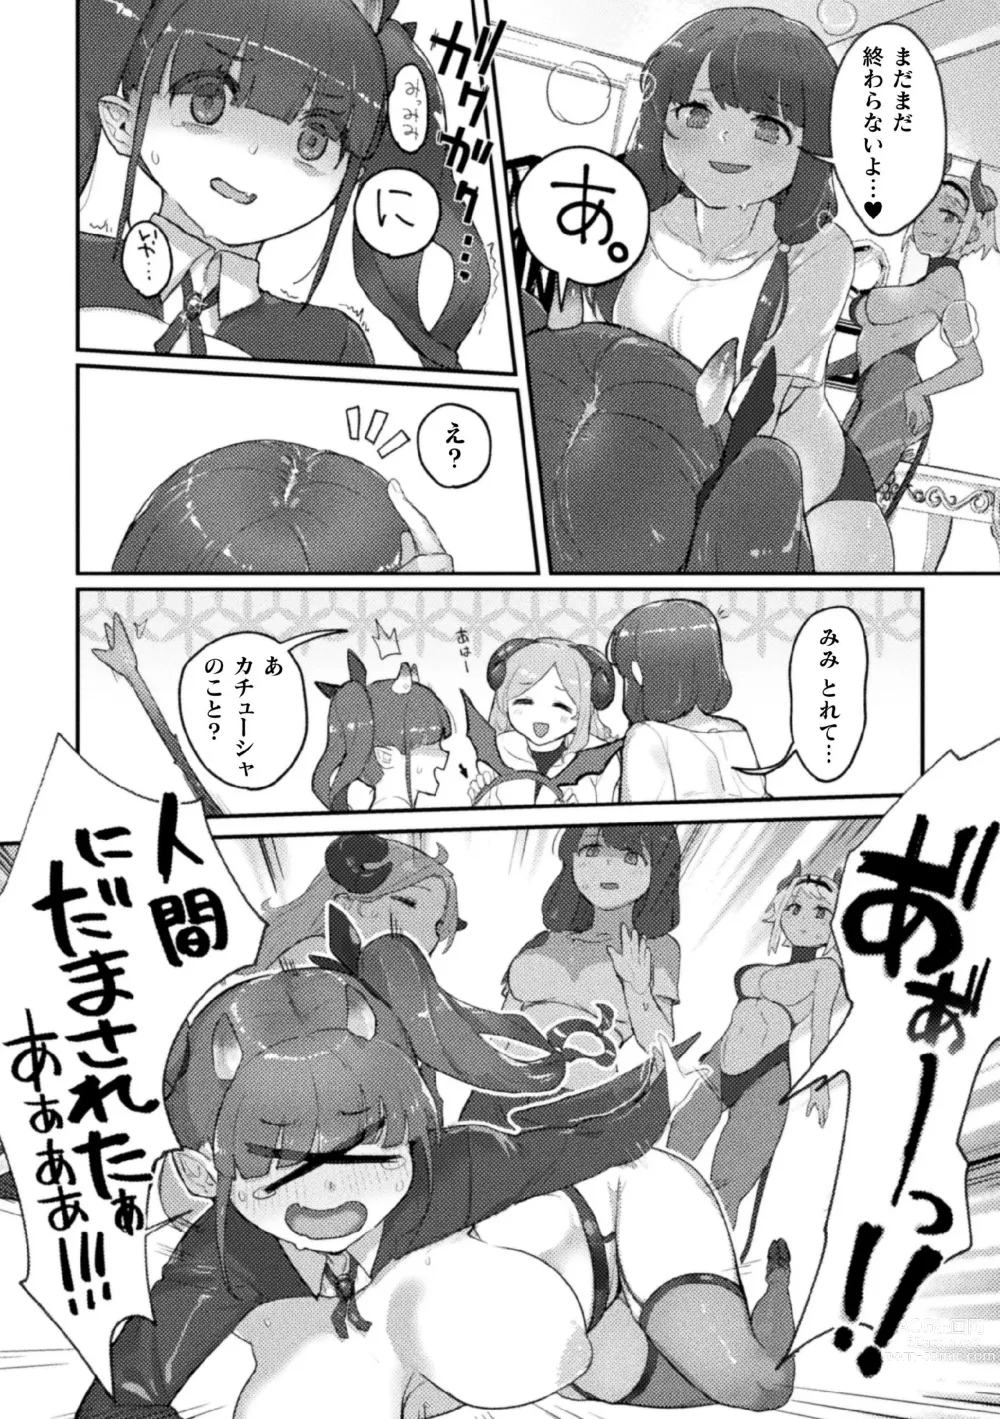 Page 56 of manga 2D Comic Magazine Succubus Yuri H Vol. 2